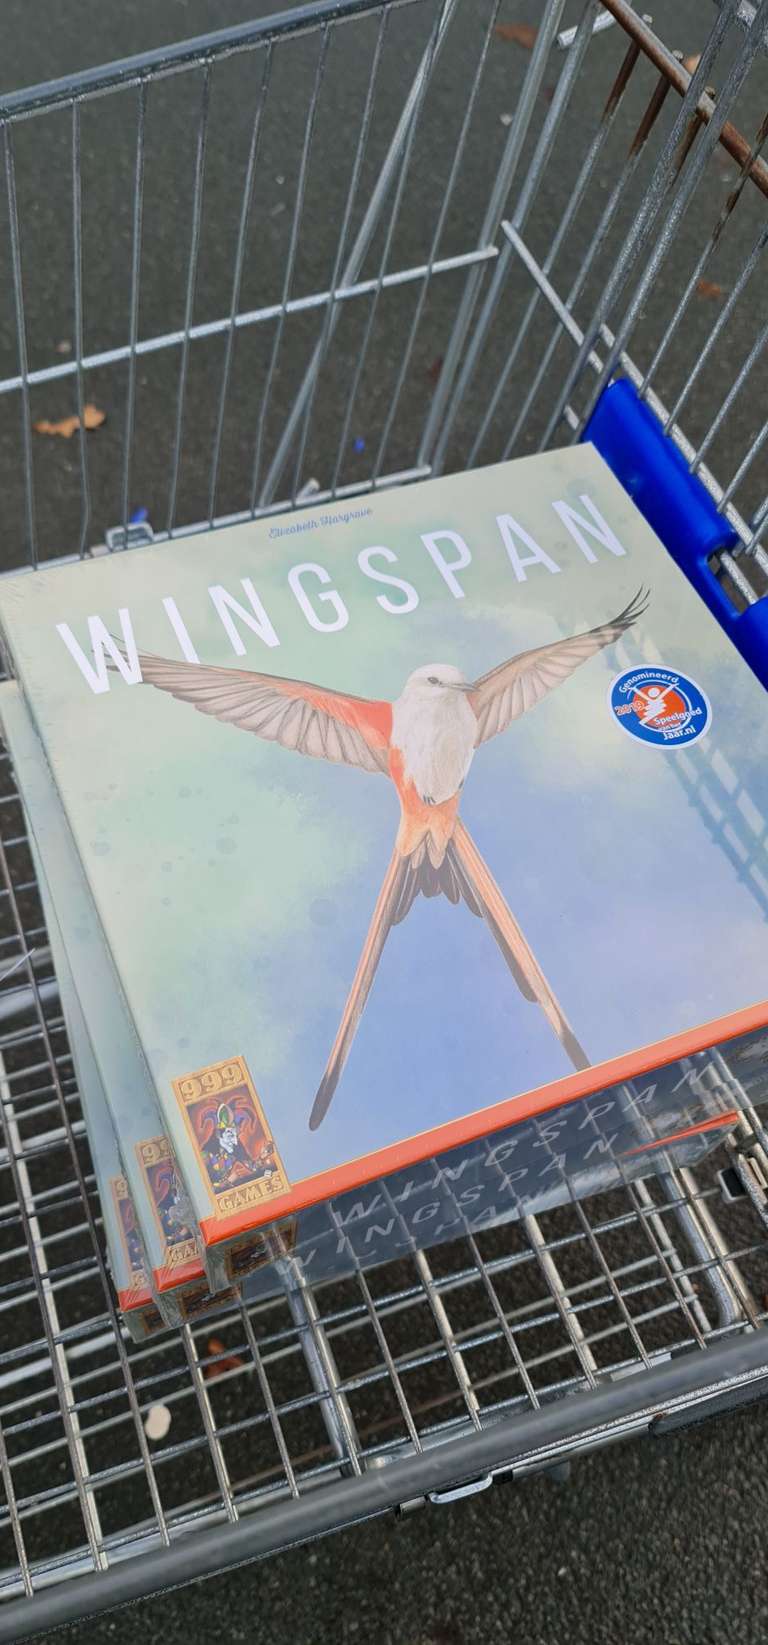 [Makro Nederland] 999 games Wingspan €10.99 ex btw landelijk!!